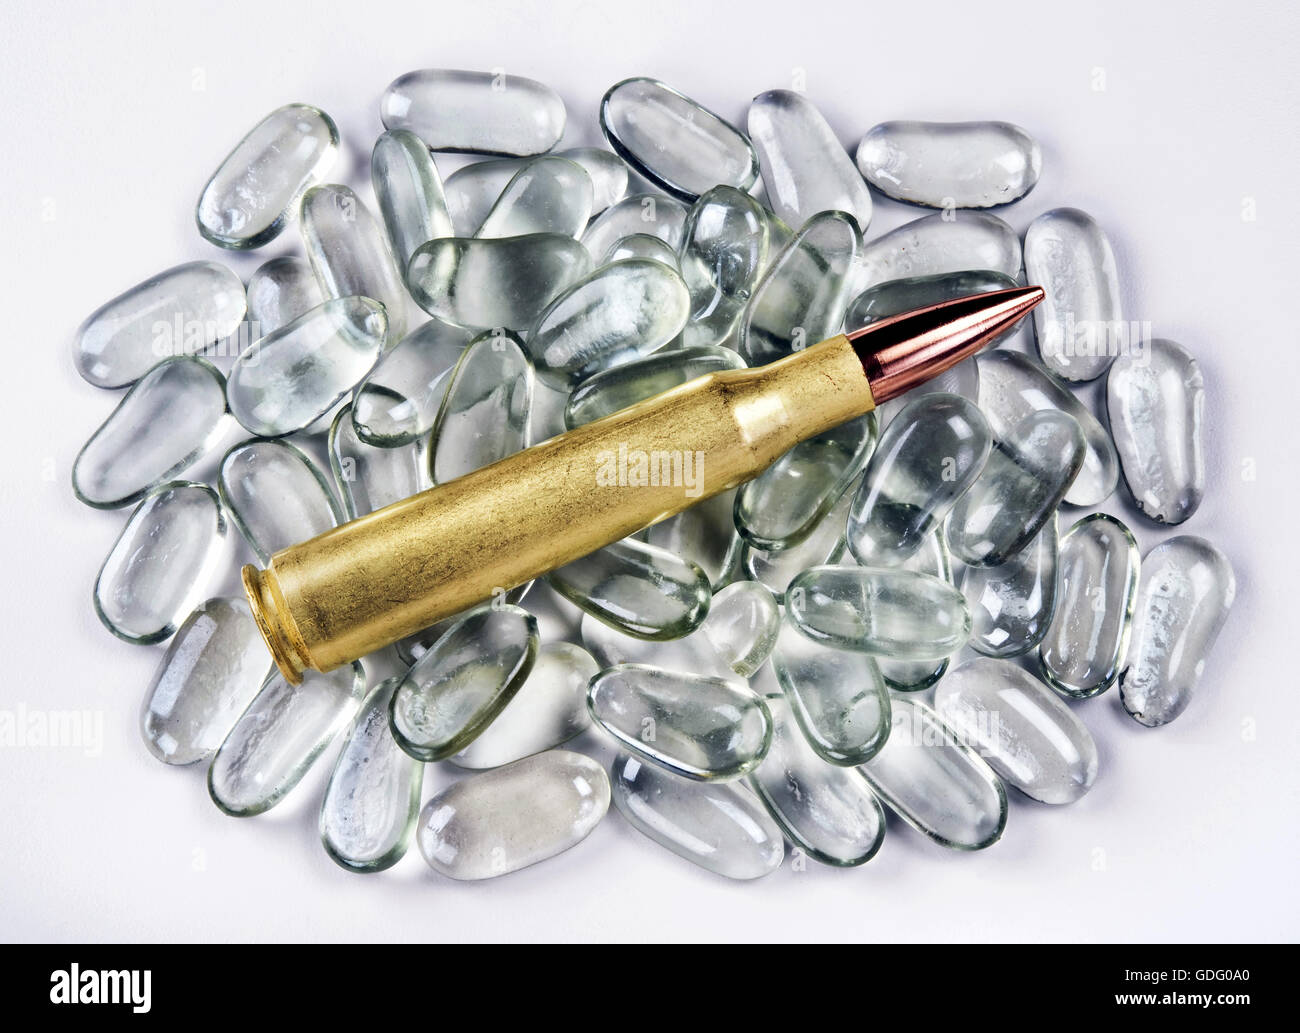 50 caliber brass bullet on polished glass stones. Stock Photo